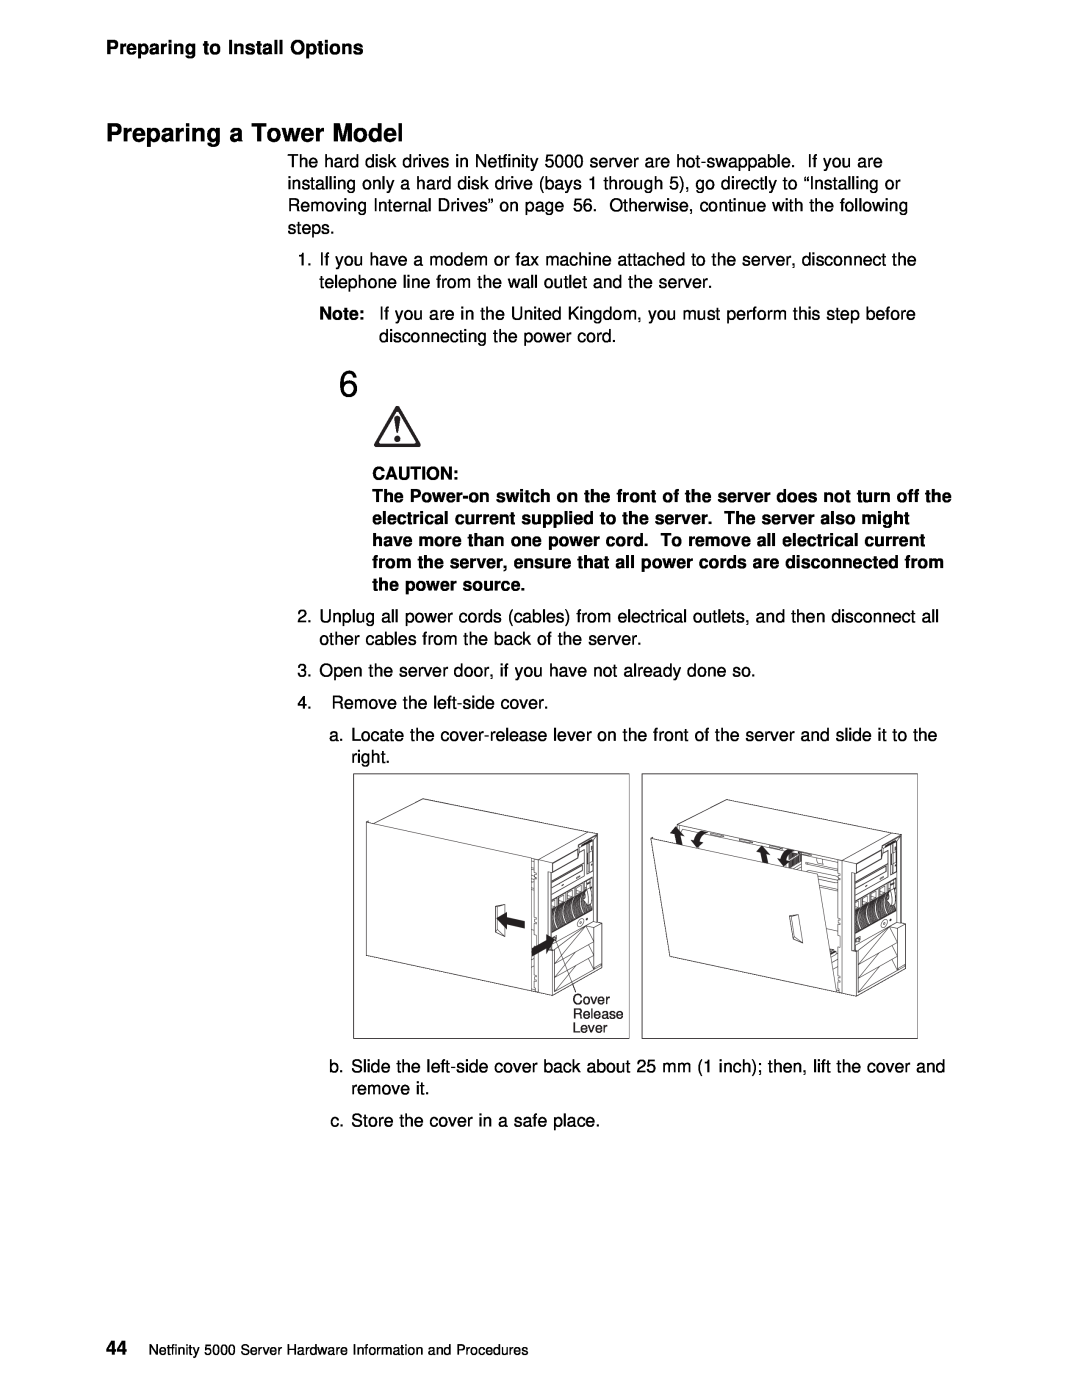 IBM 5000 manual Preparing a Tower Model, Preparing to Install Options, cords 